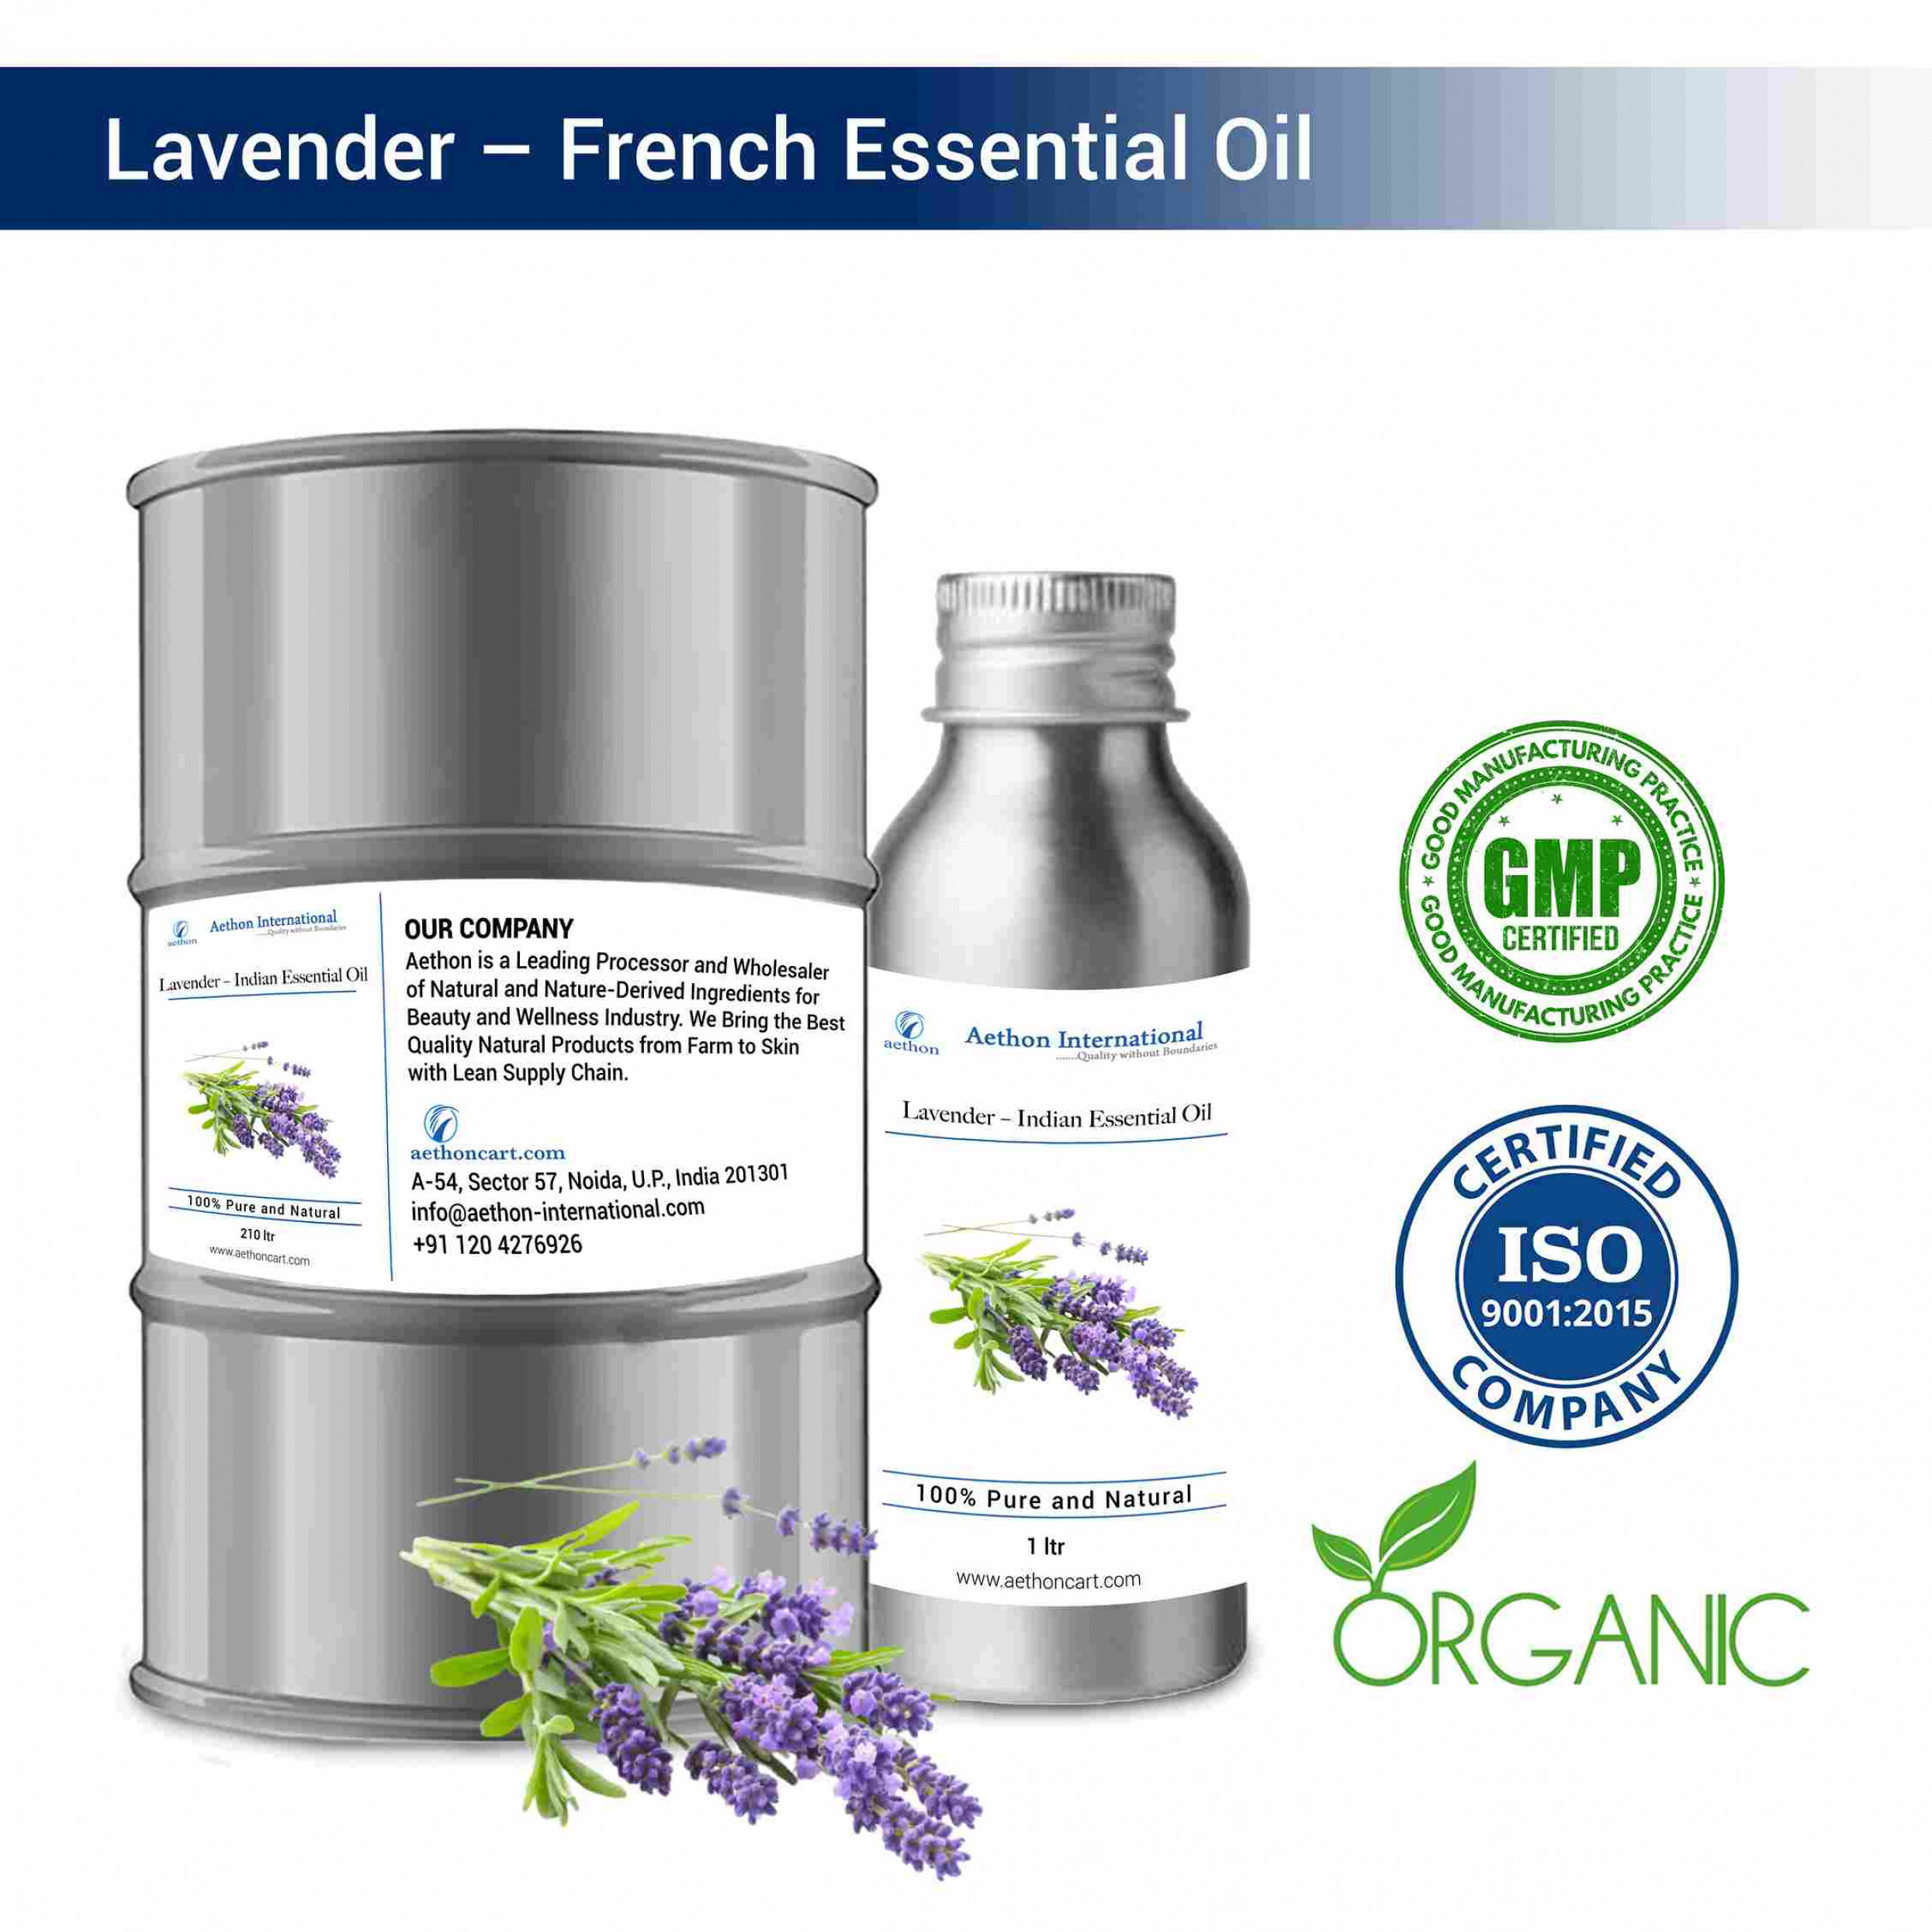 Lavender – Indian Essential Oil